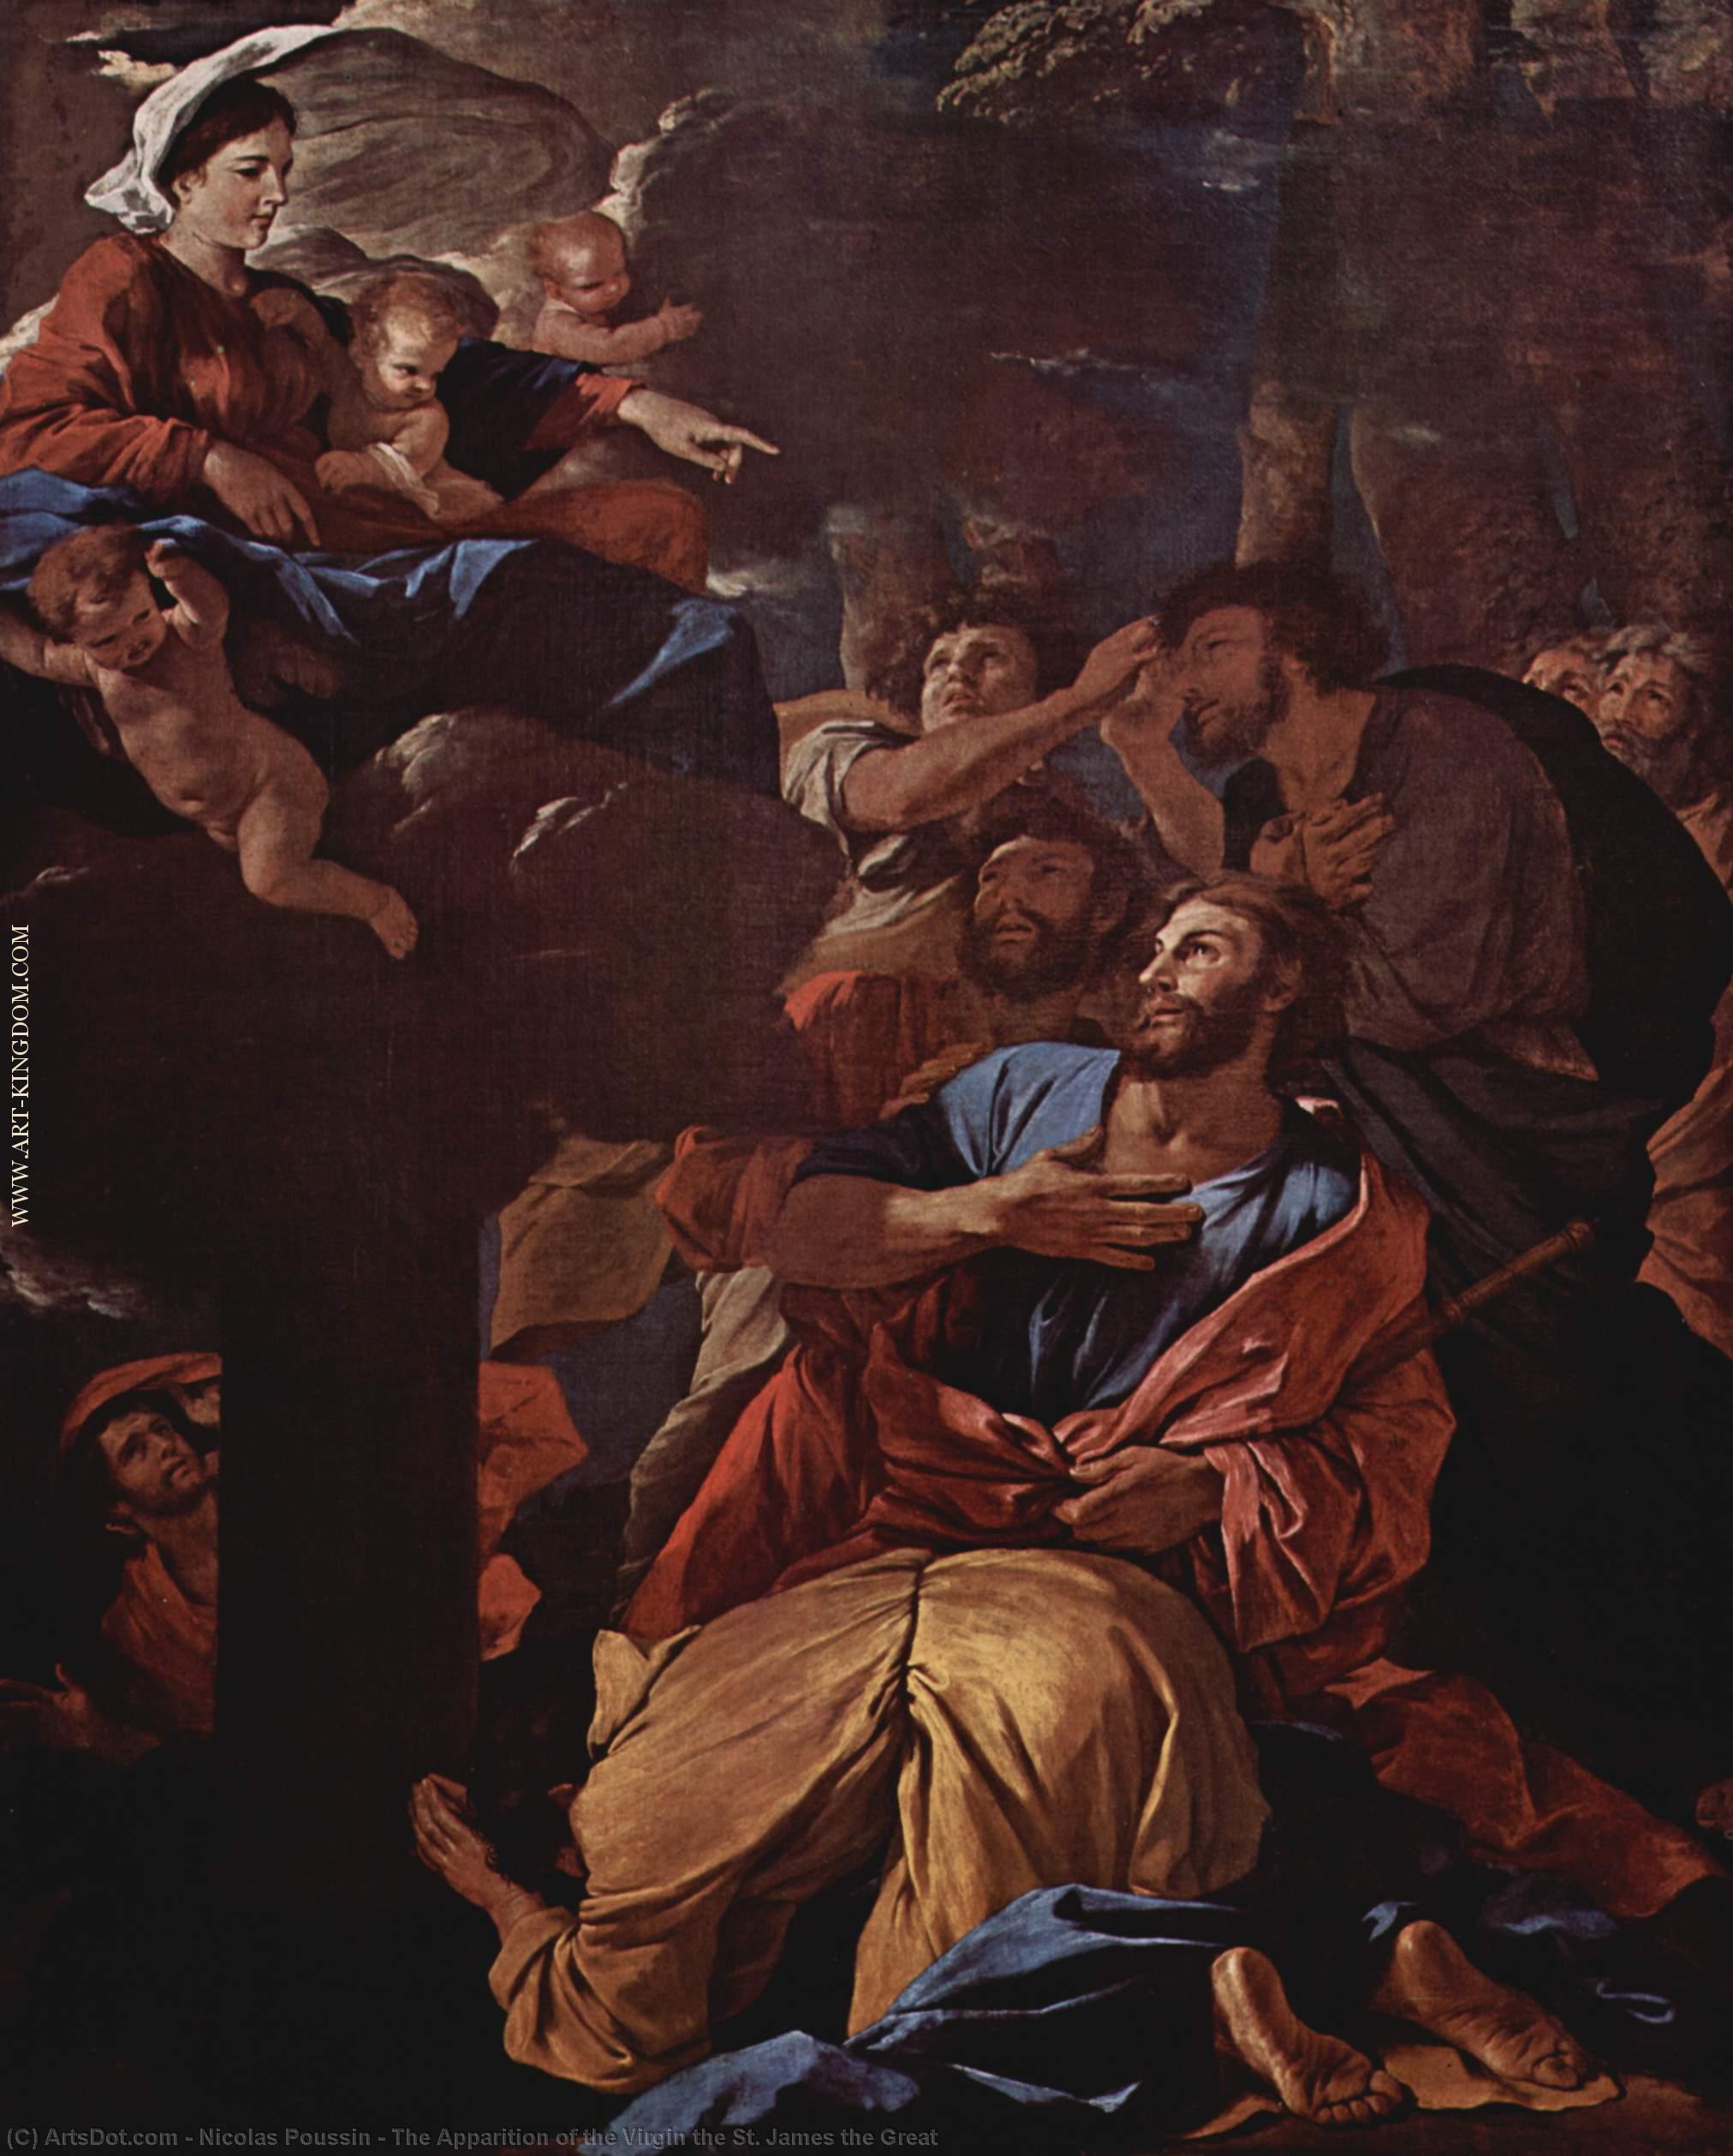 Wikoo.org - موسوعة الفنون الجميلة - اللوحة، العمل الفني Nicolas Poussin - The Apparition of the Virgin the St. James the Great